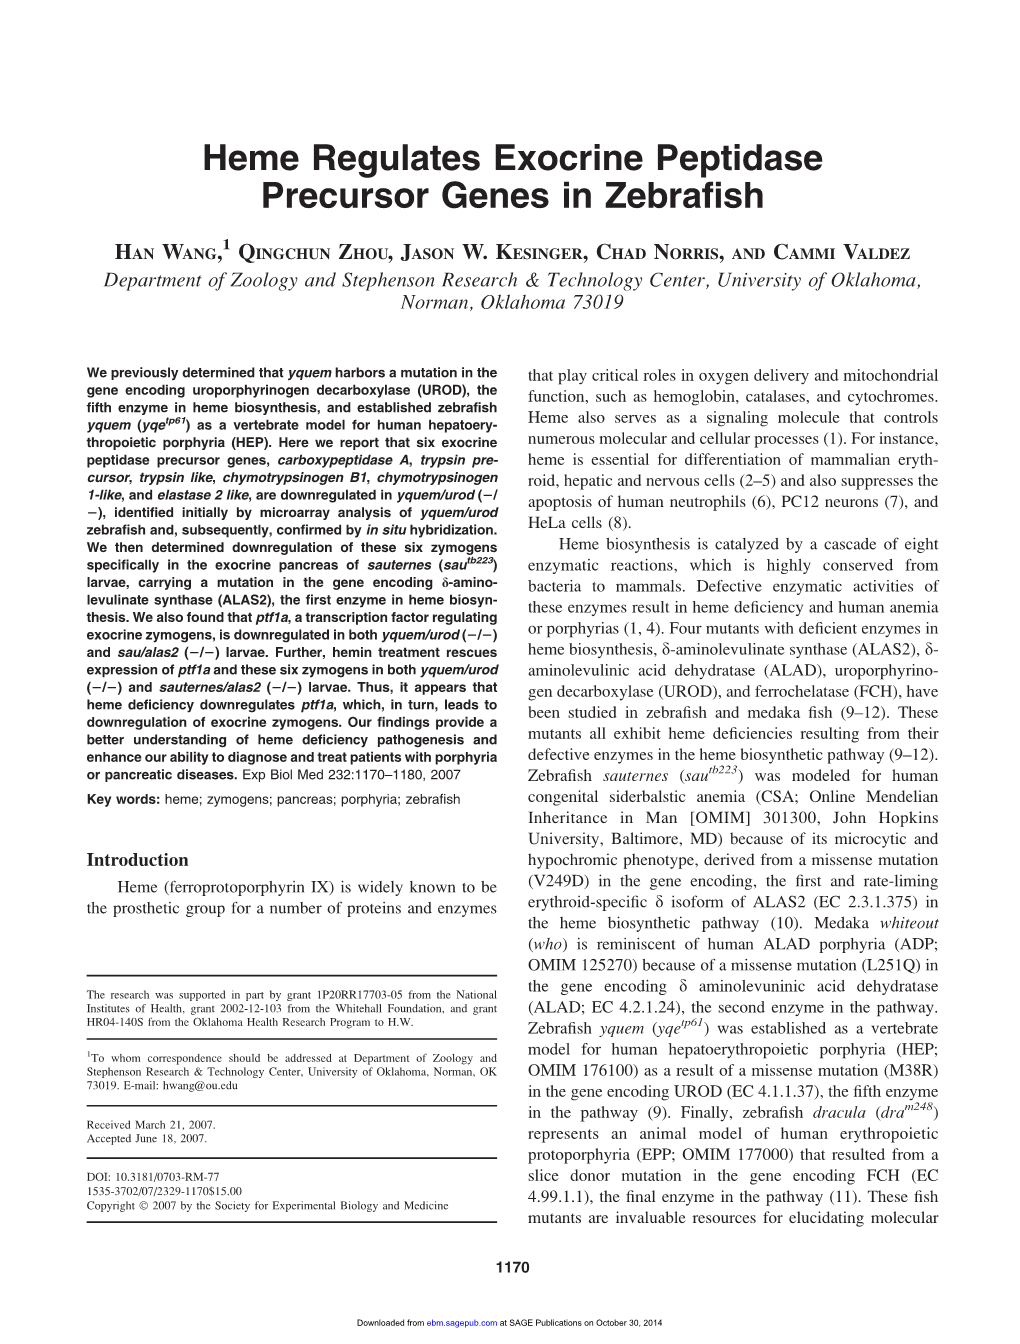 Heme Regulates Exocrine Peptidase Precursor Genes in Zebrafish